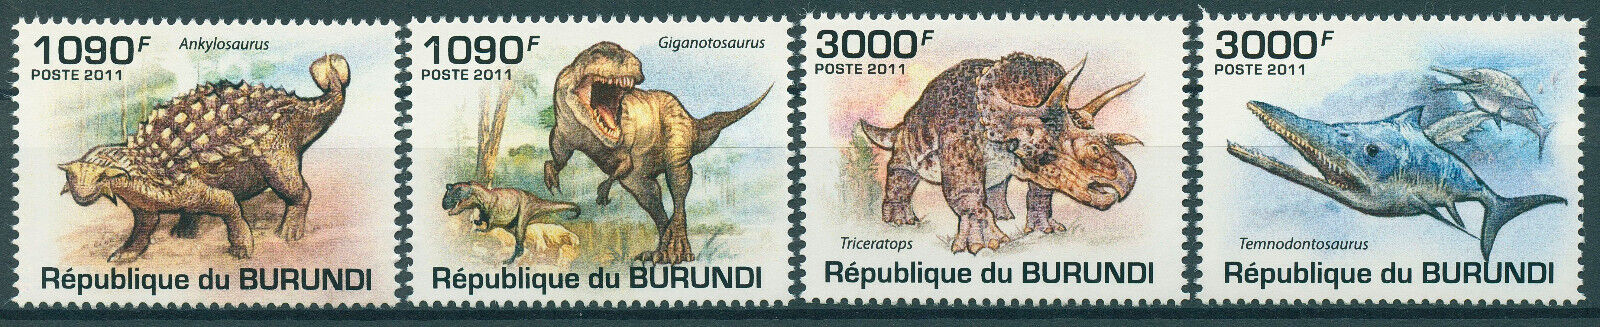 Burundi 2011 MNH Dinosaurs Stamps Prehistoric Animals Triceratops 4v Set